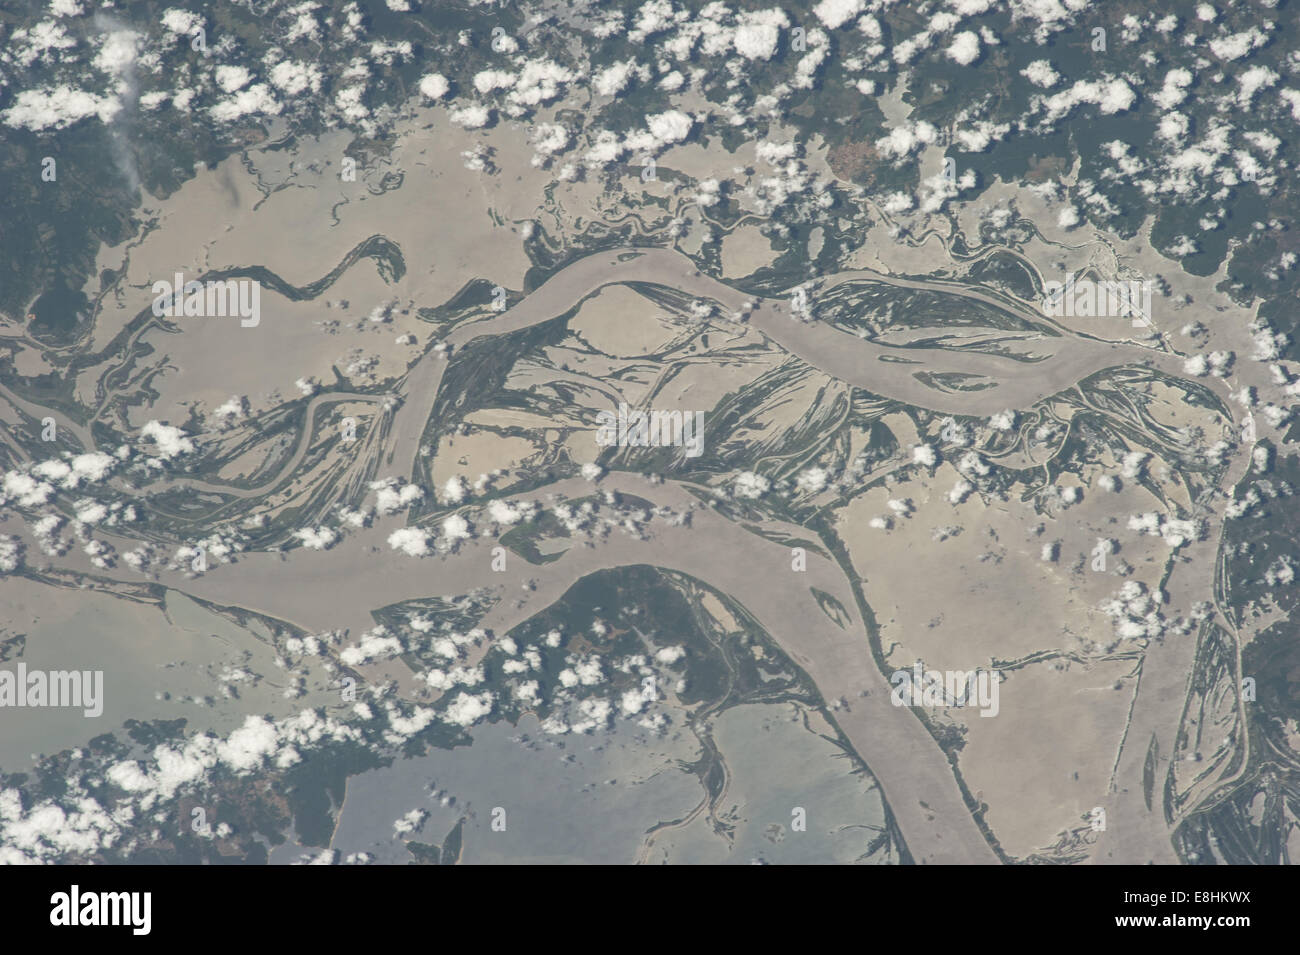 Amazon River CEO Erde Beobachtung internationalen Raumstation NASA Santarum Brasilien Mannschaft Erde Beobachtungen Aue Raum sta Stockfoto